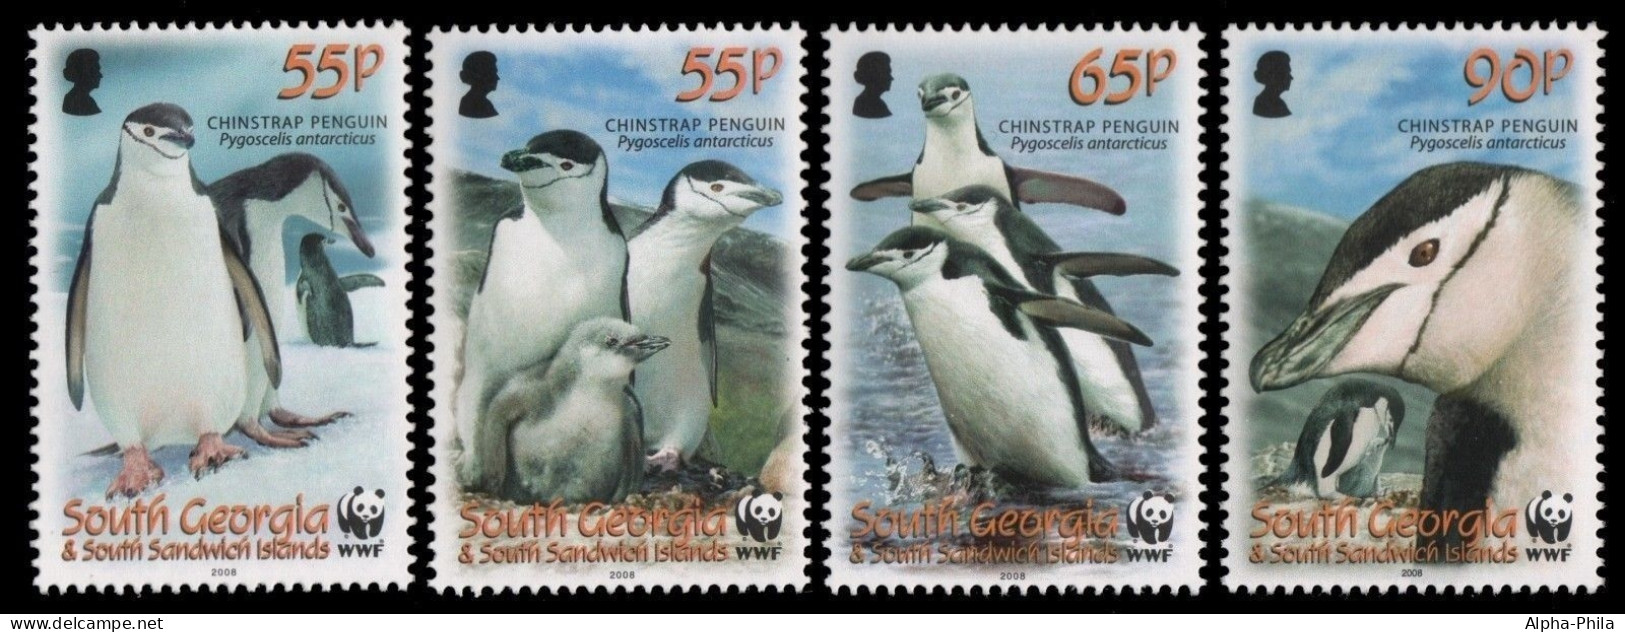 Süd-Georgien 2008 - Mi-Nr. 454-457 ** - MNH - Pinguine / Penguins - Georgias Del Sur (Islas)